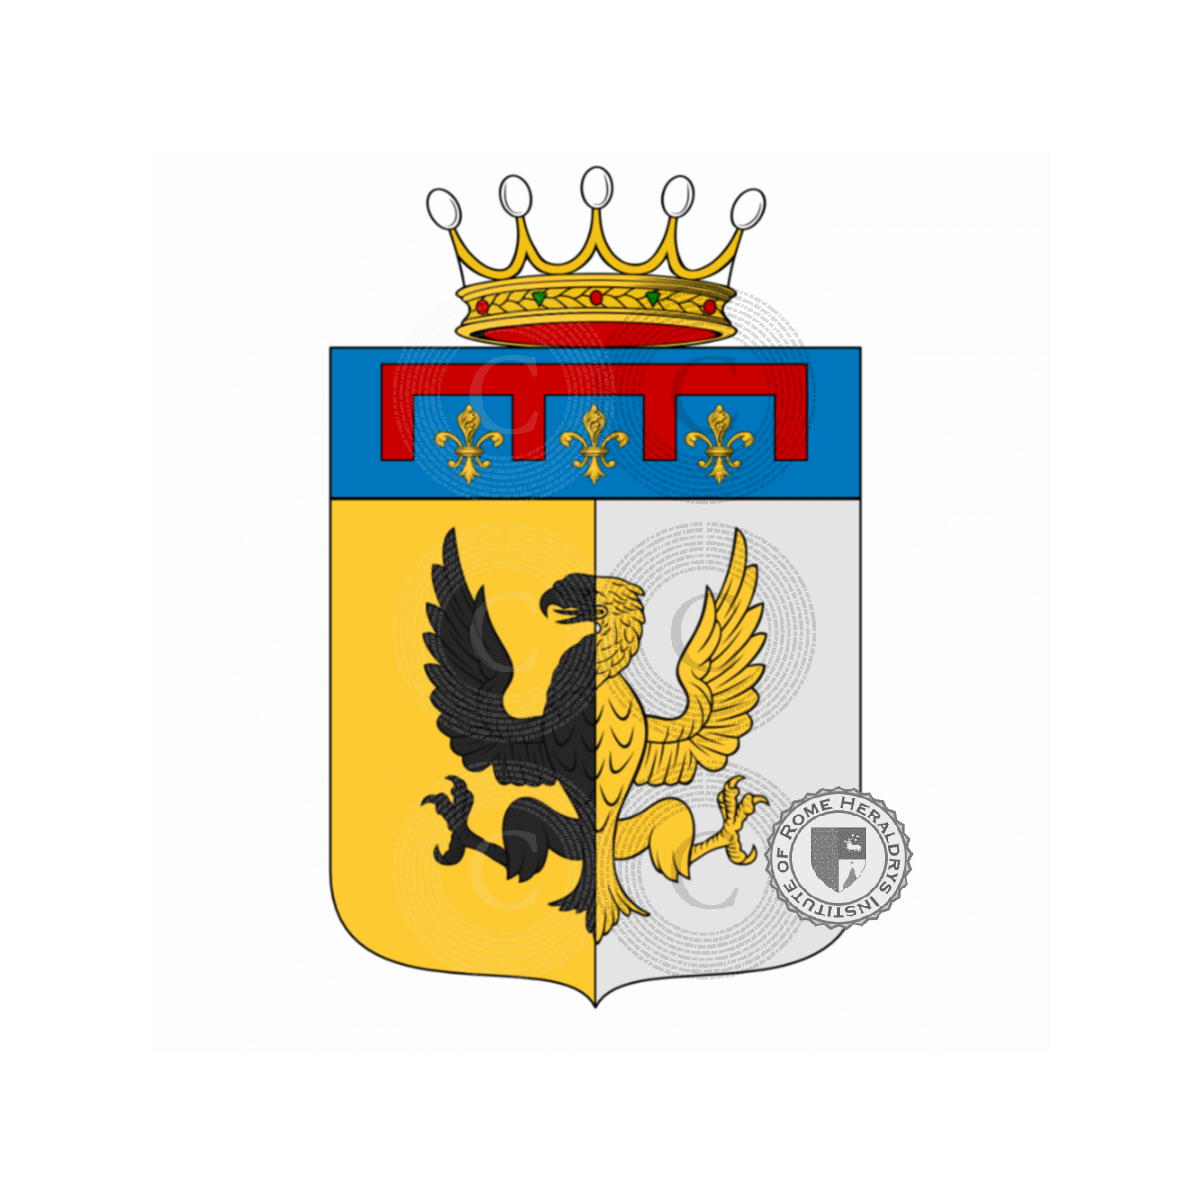 Escudo de la familiaParmegiani, Parmeggiani,Parmigiani